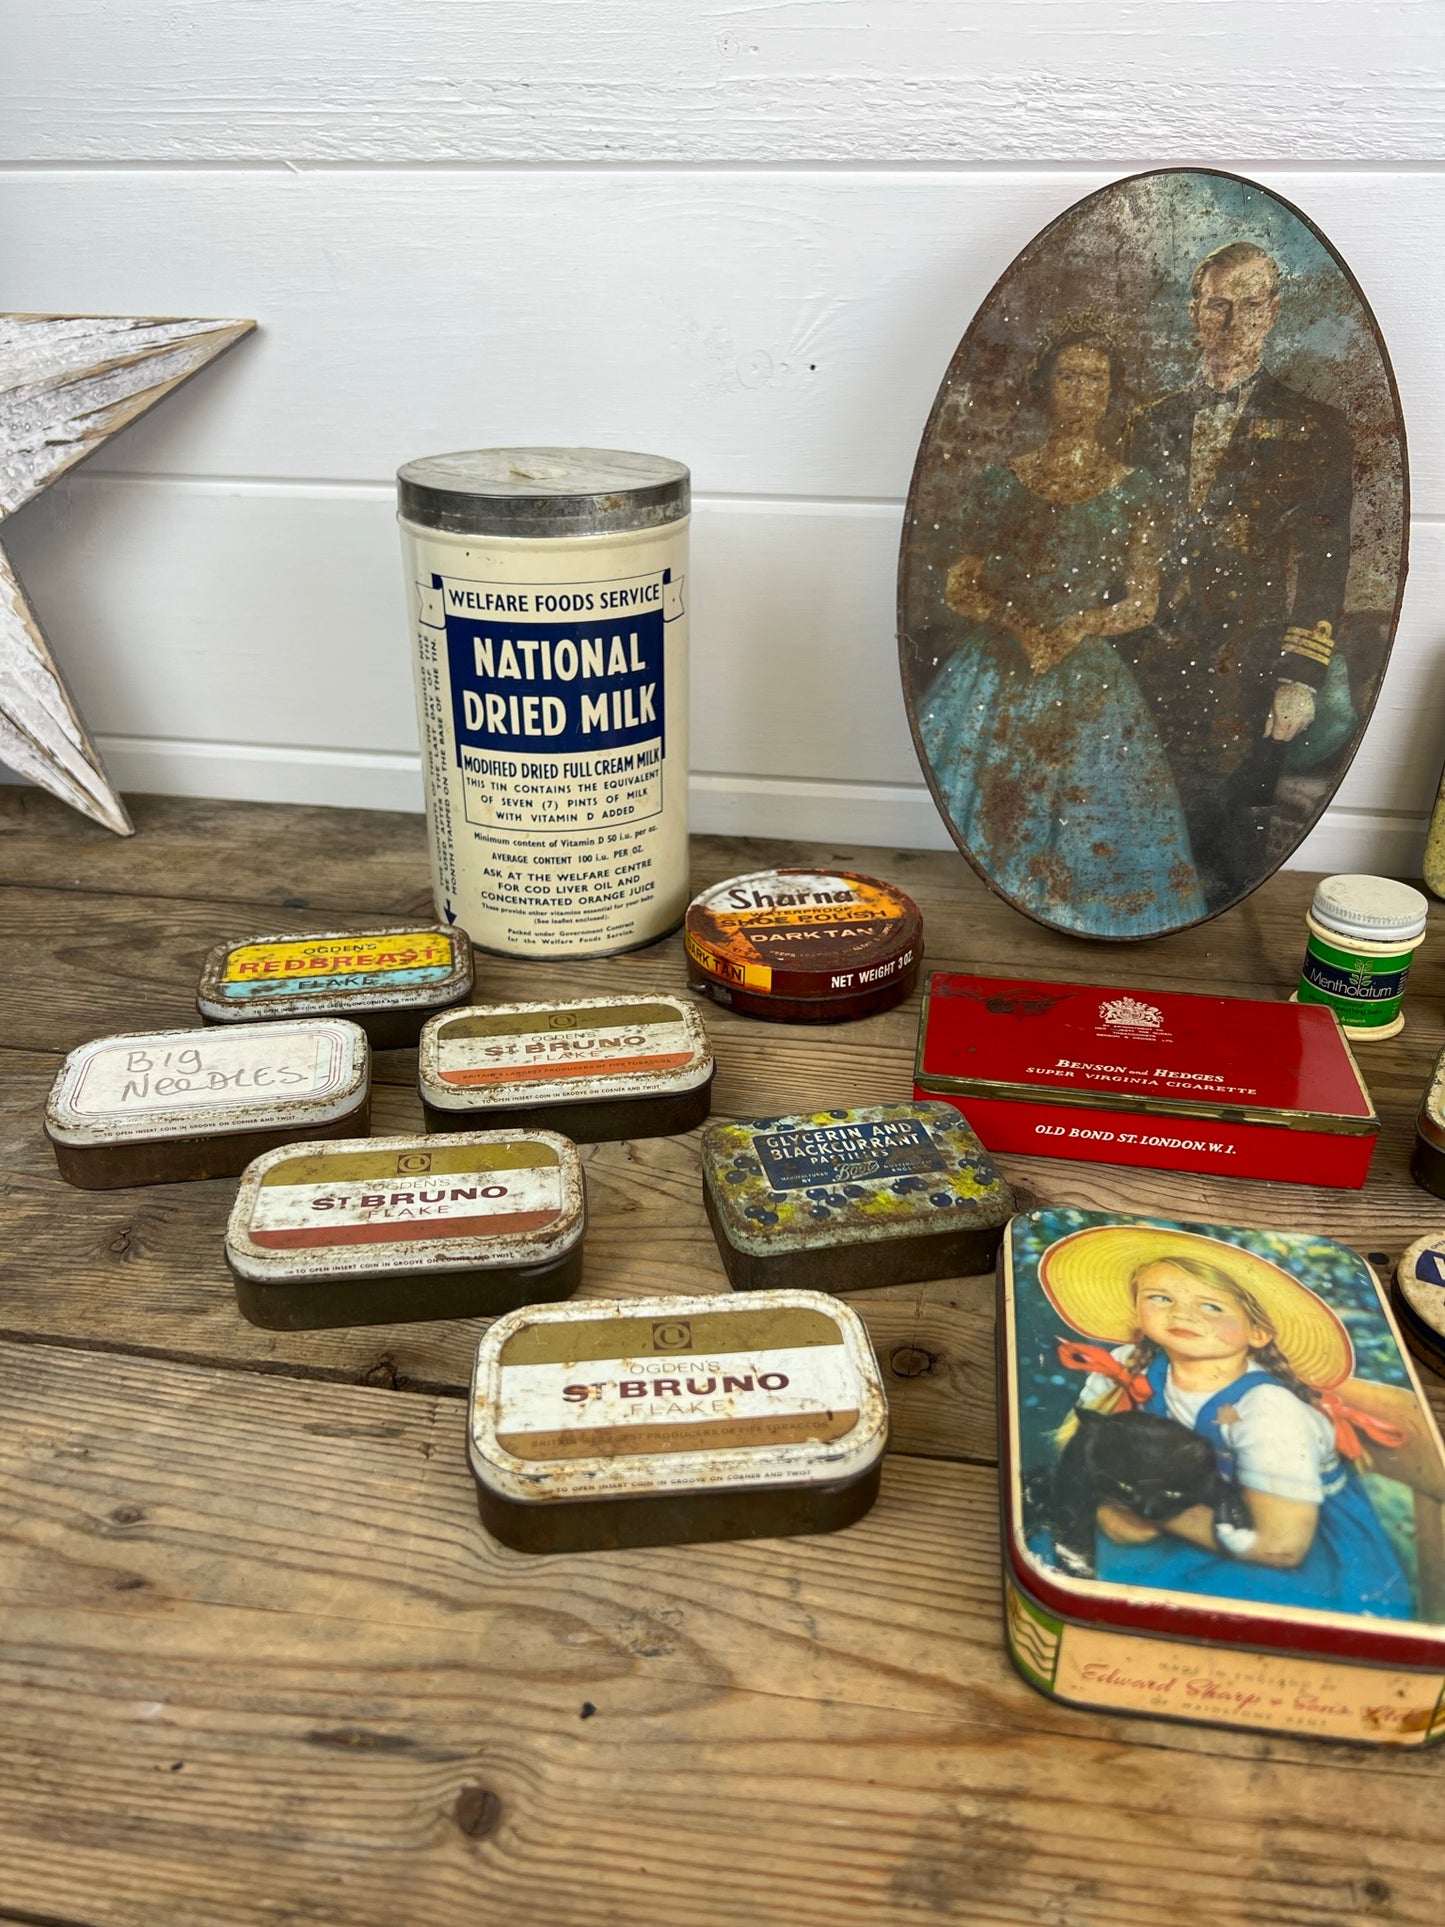 18x Vintage Tin Job lot Collectable Tobacco Tins Rustic Décor Vintage Display